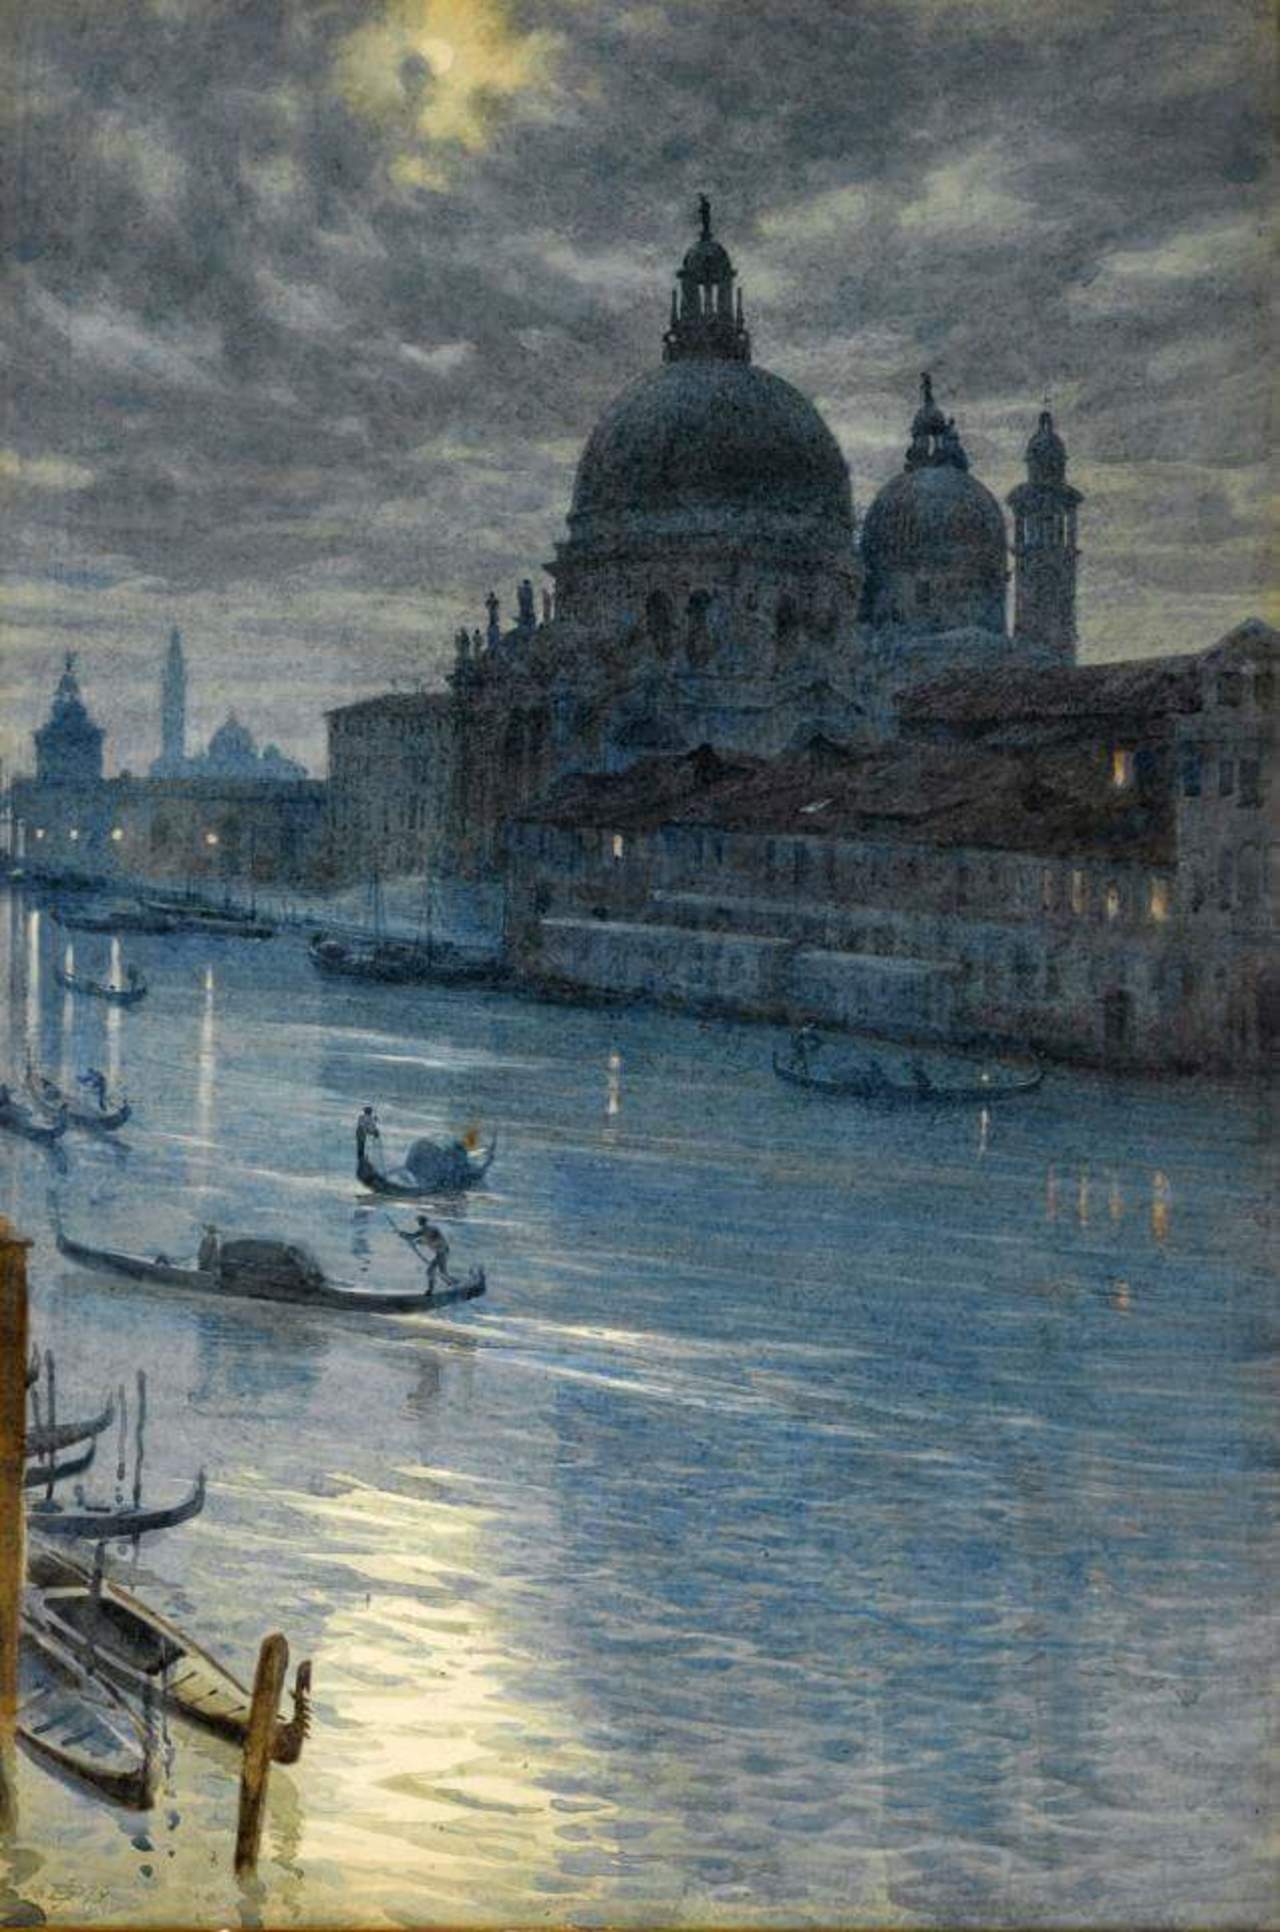 RT @HistoricArtPage:  Edward John Poynter (1836-1919) - A moonlight scene, Venice (1879)" Always look on the bright side of life! " https://t.co/XoNsG98G9t